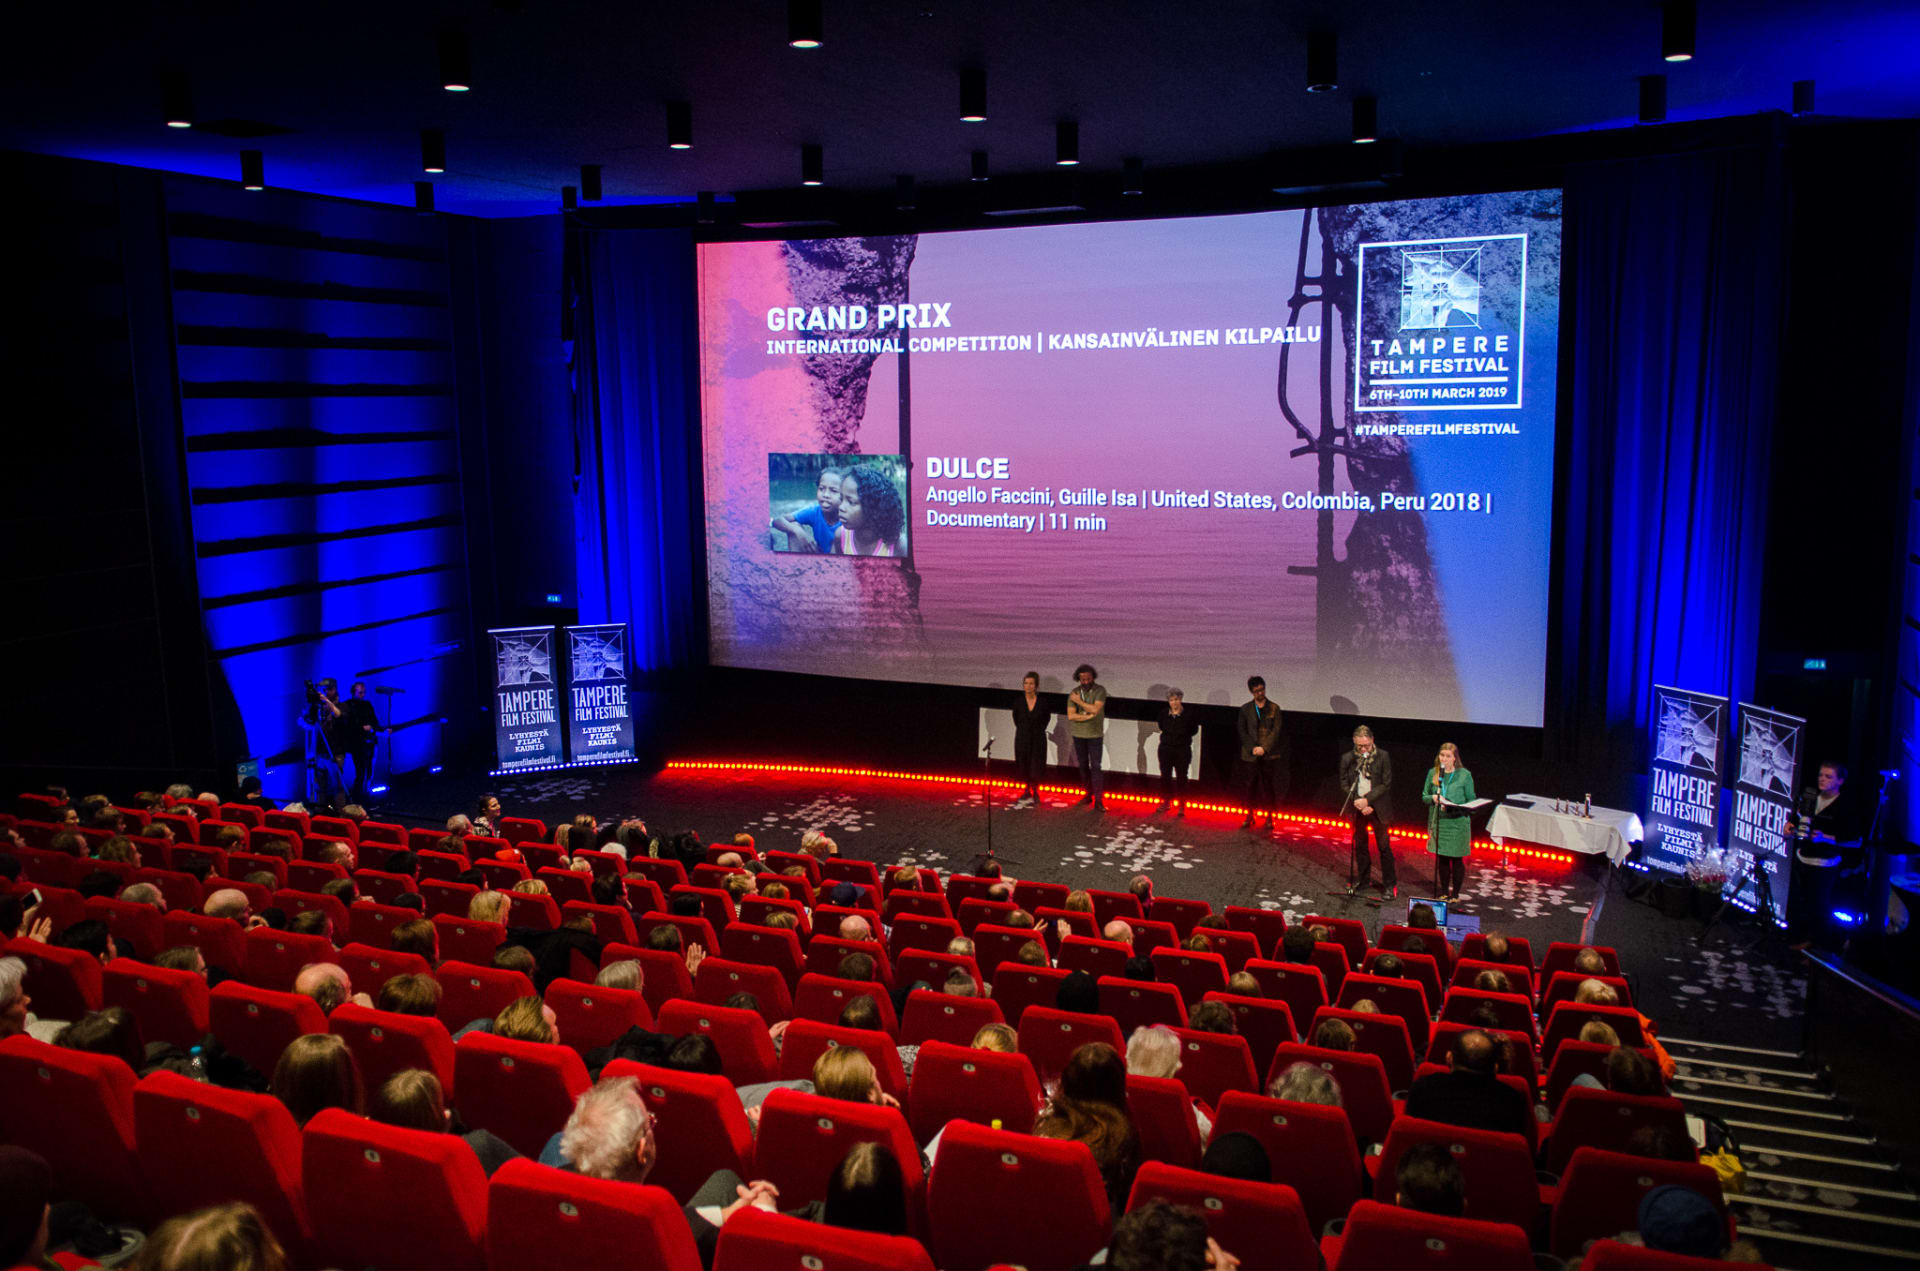 Tampere Film Festival awards